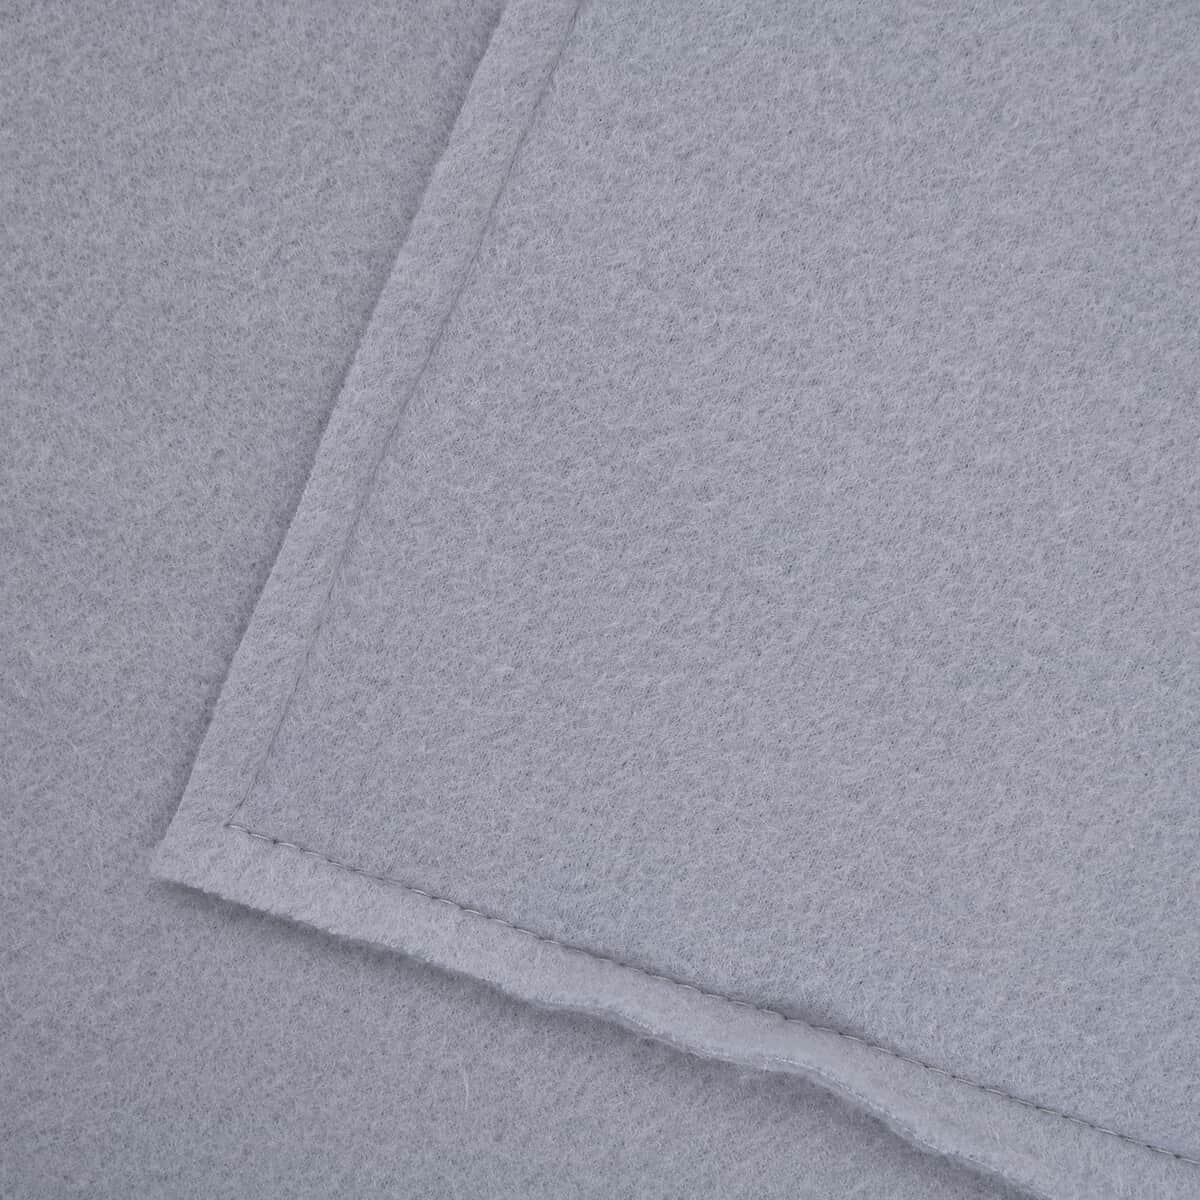 Homesmart 2 in 1 Gray Solid Fleece Travel Blanket with Folded Storage Pocket (Microfiber) image number 2